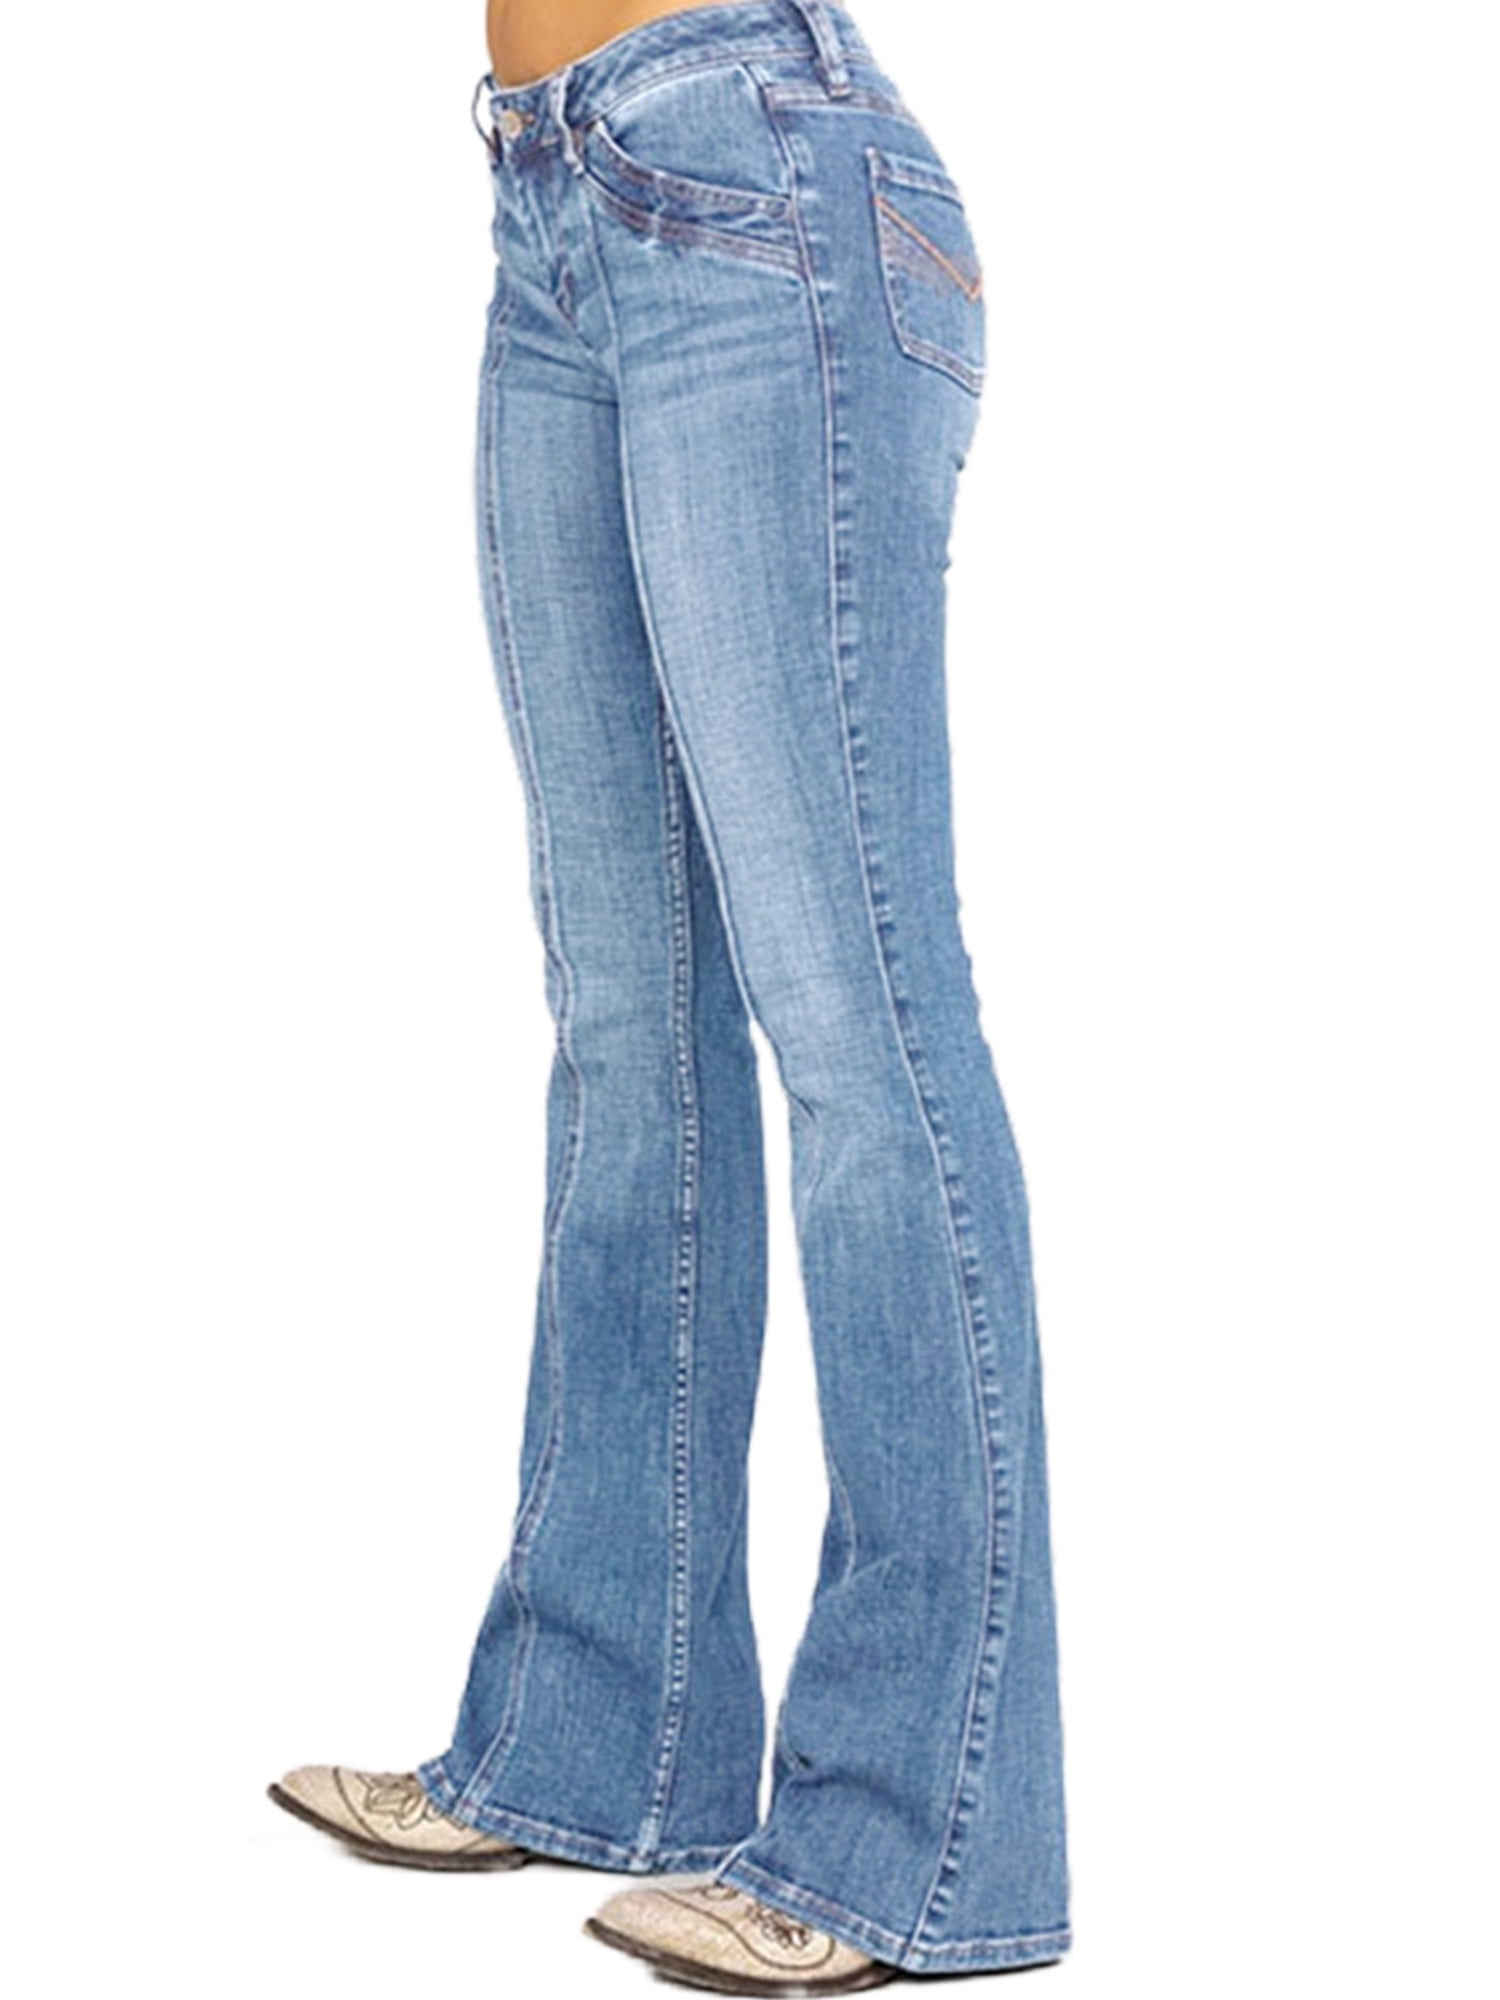 Capreze Women Buttoned Bootcut Jeans Casual Flare Denim Pants Bell Bottom  Jeans with Pockets Light Blue L